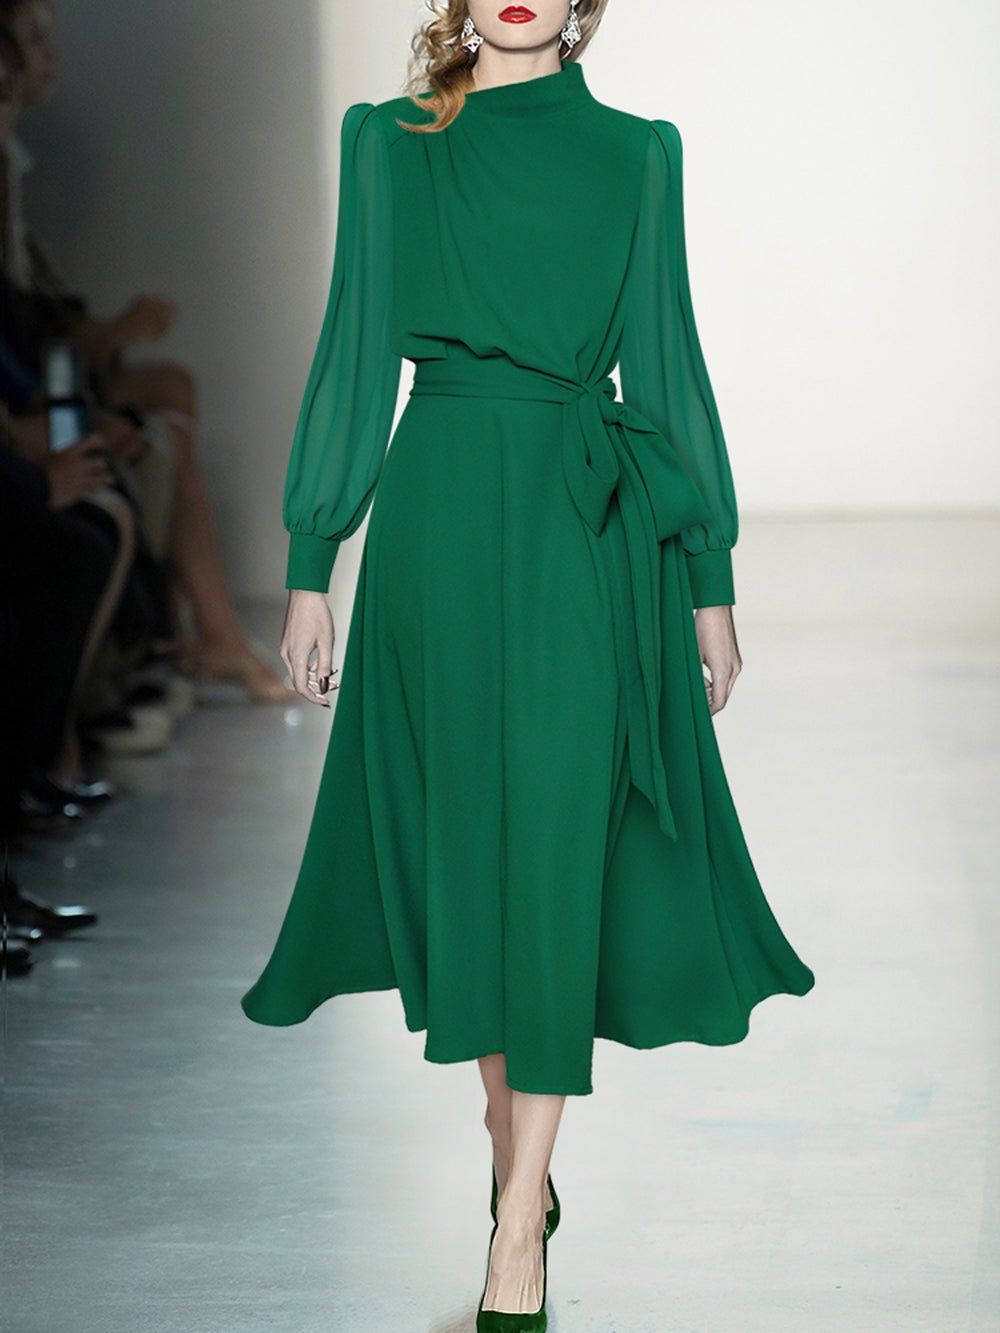 Stylish Ways to Wear a Green Midi Dress